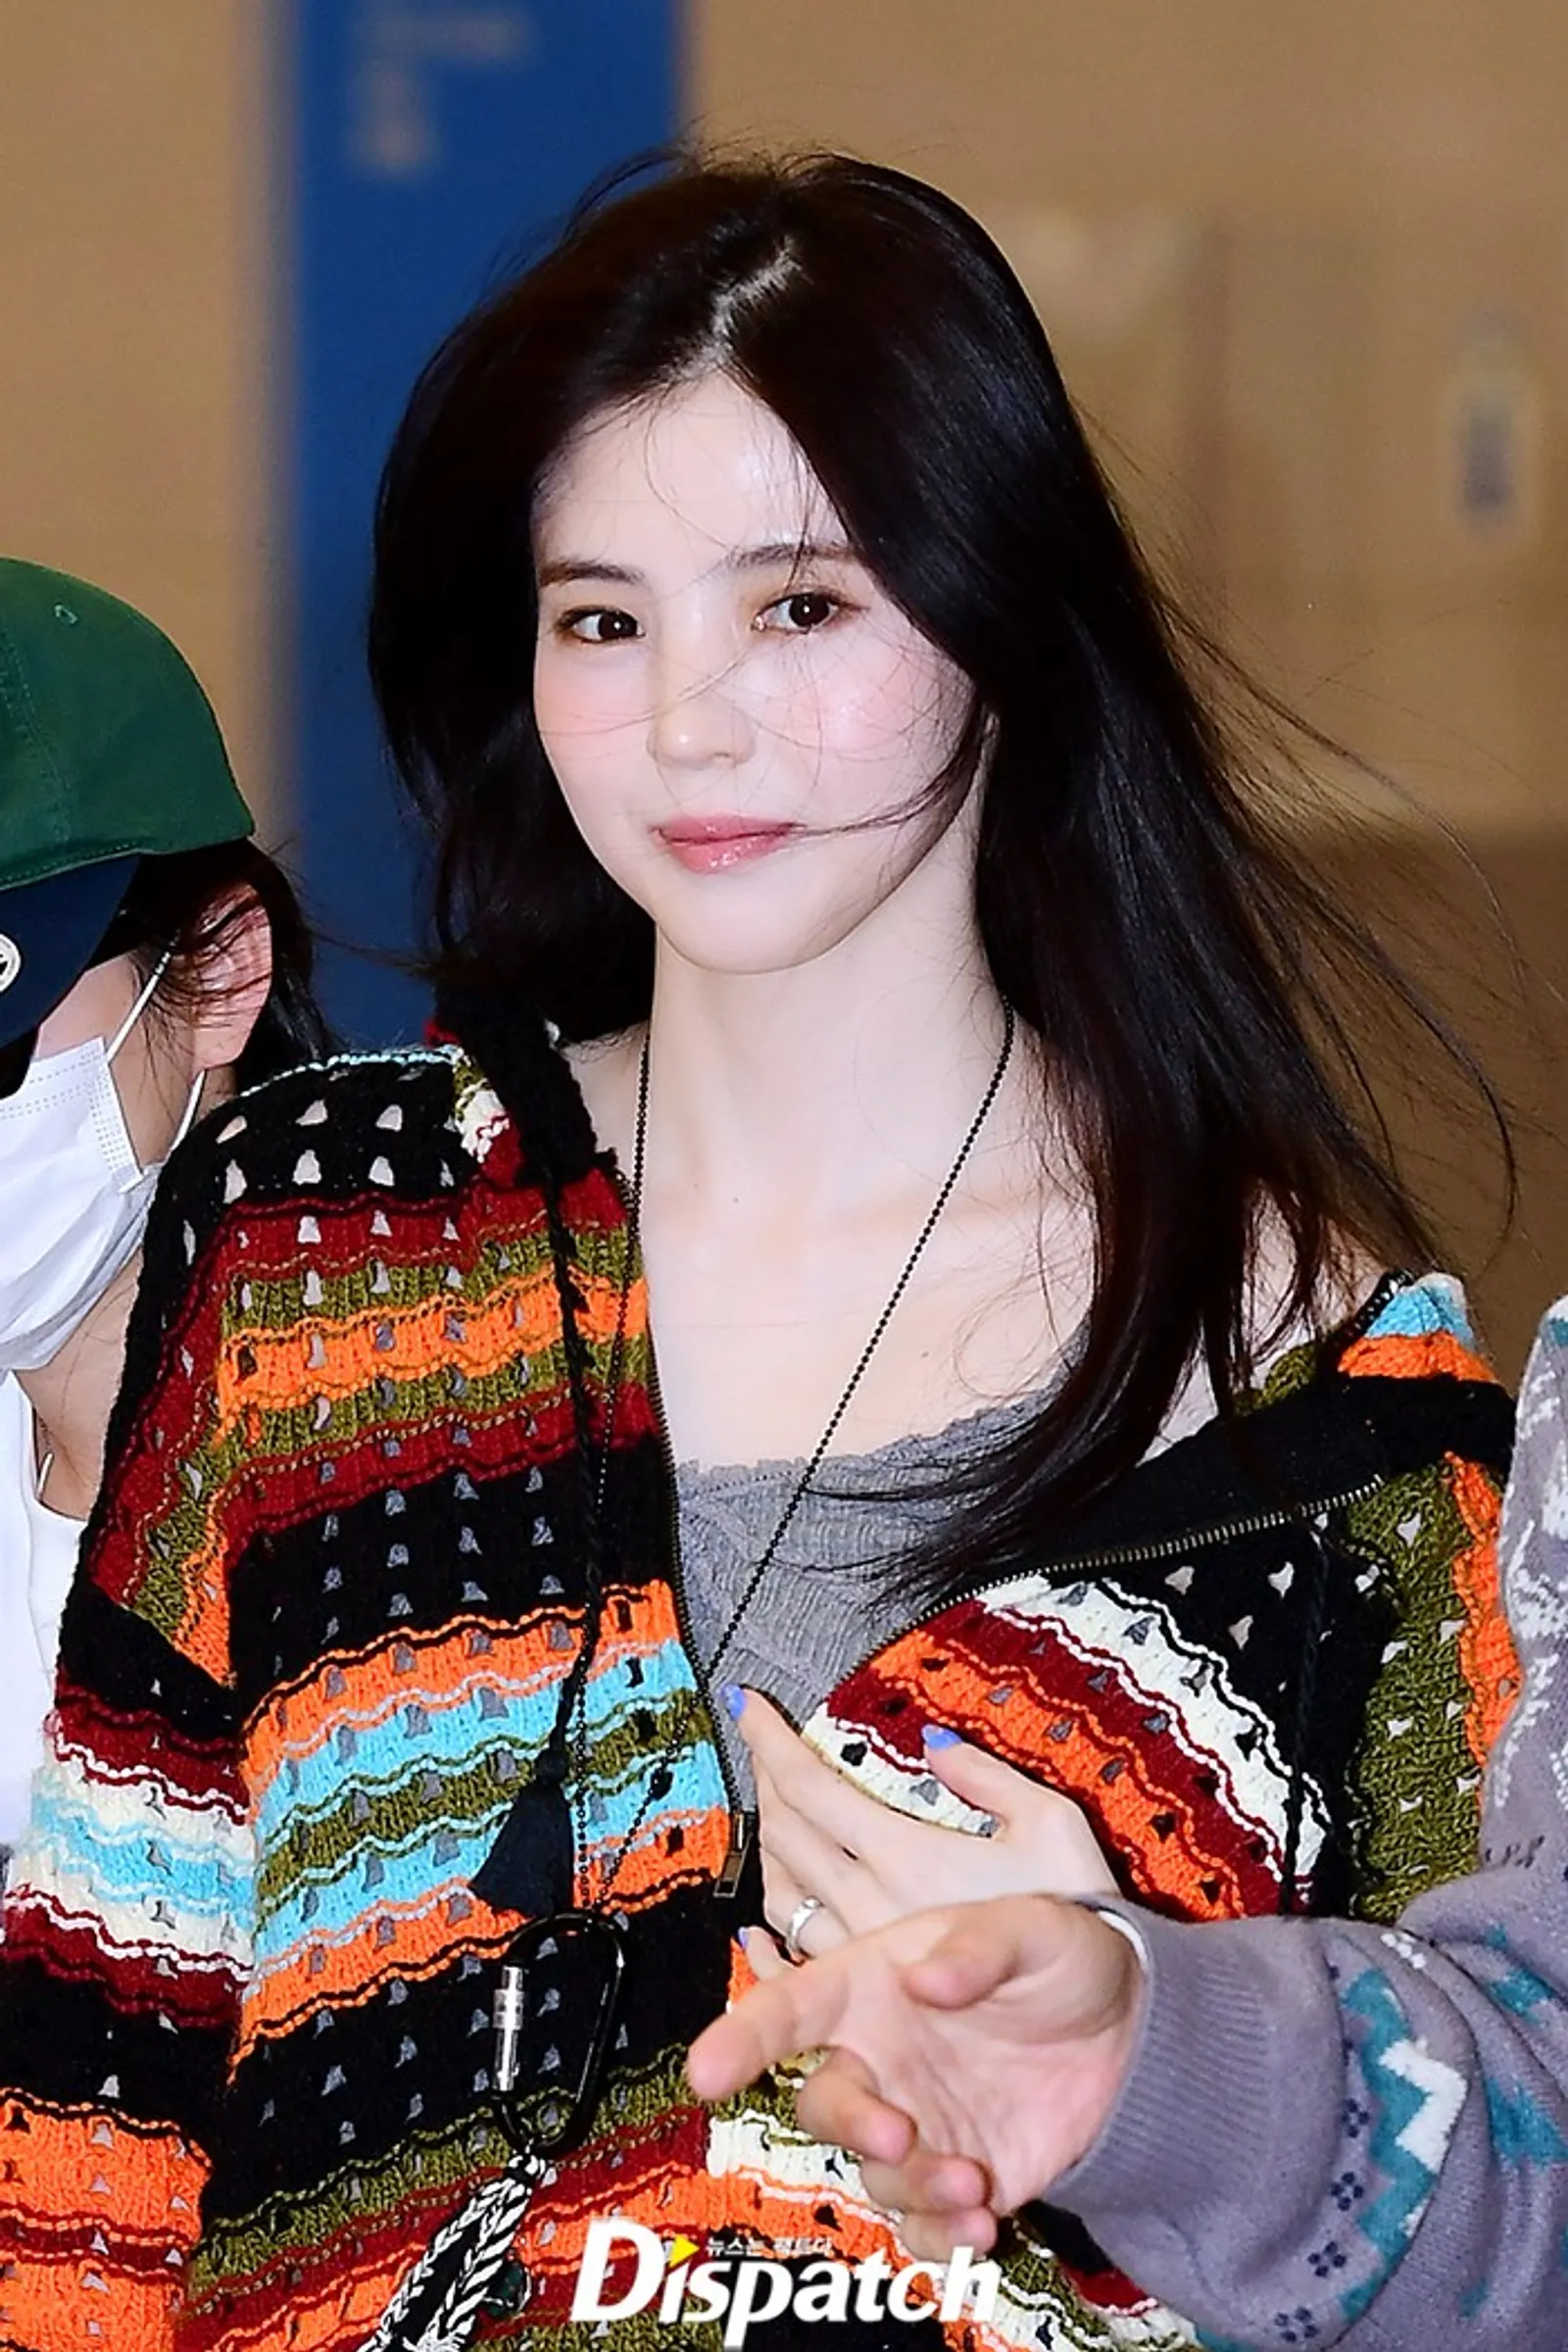 Gaya 'Ceria’ Han So Hee di Bandara Usai Liburan Bareng Ryu Jun Yeol